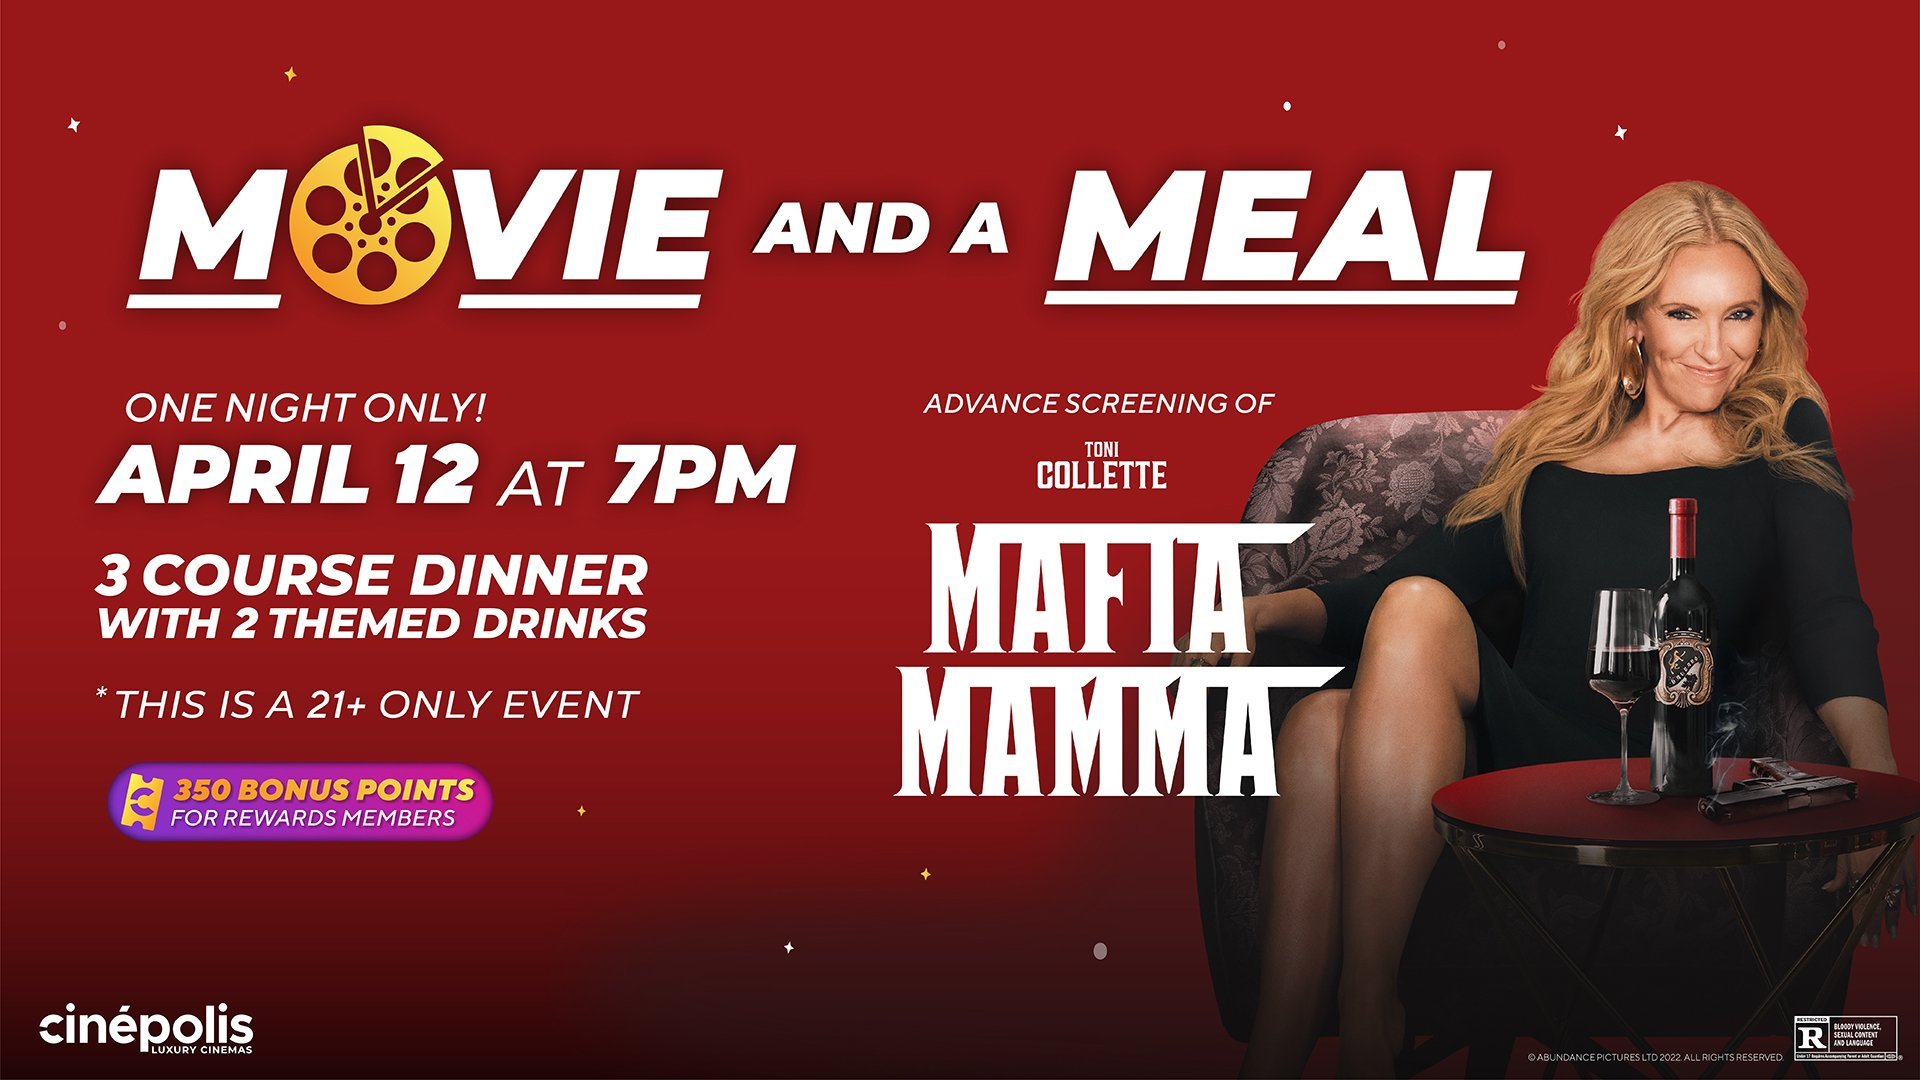 Meal Movie Mafia Mamma